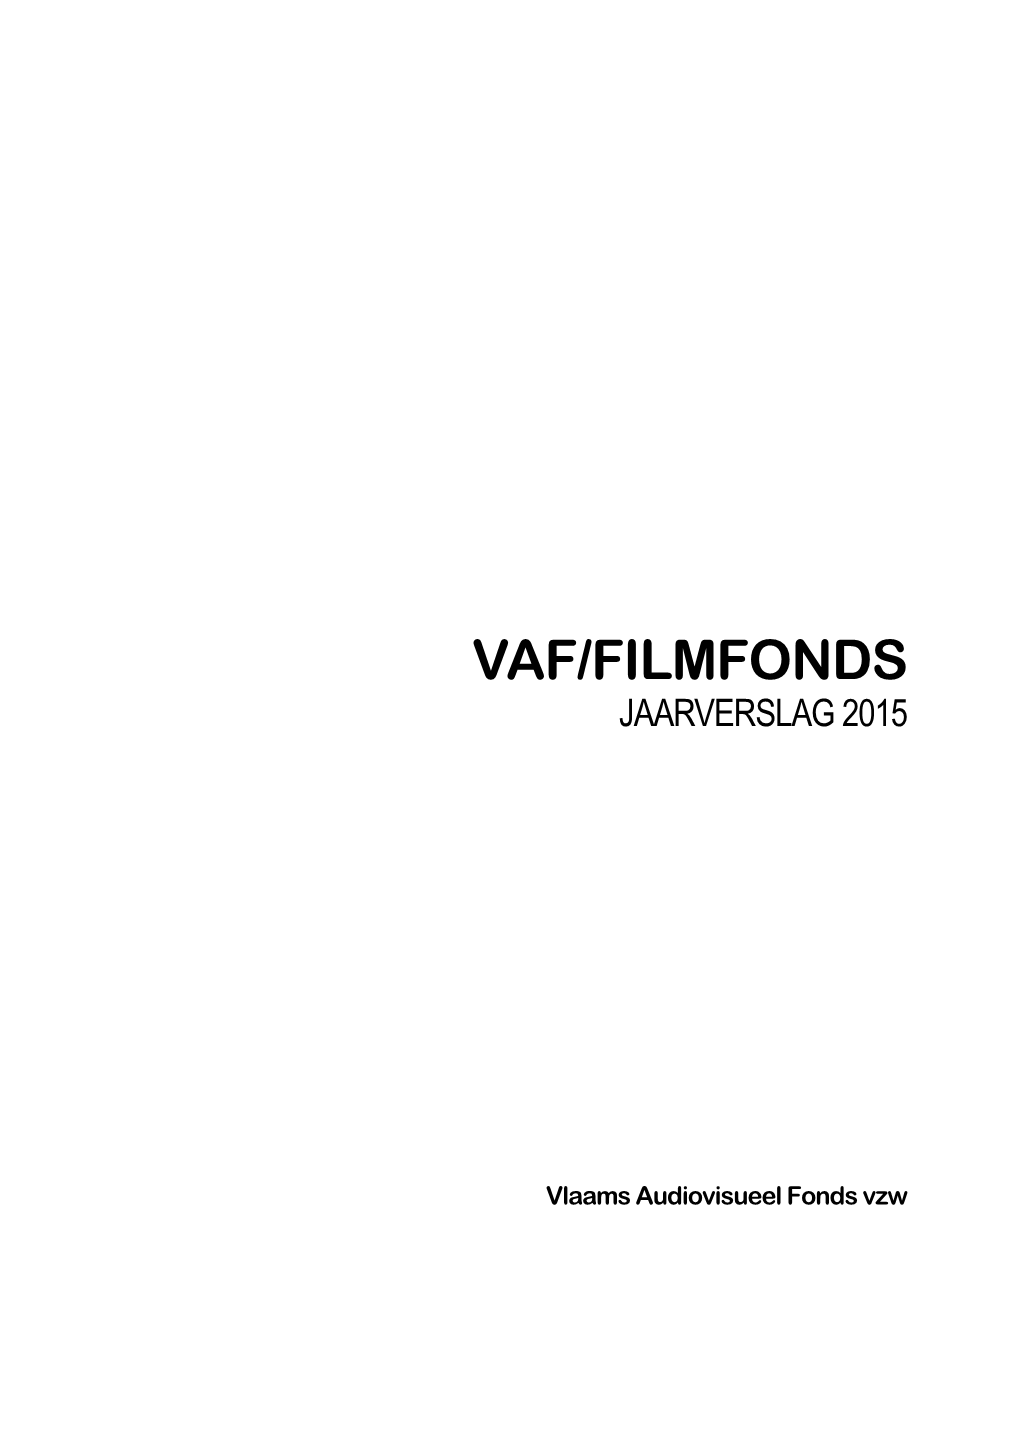 Jaarverslag VAF/Filmfonds 2015